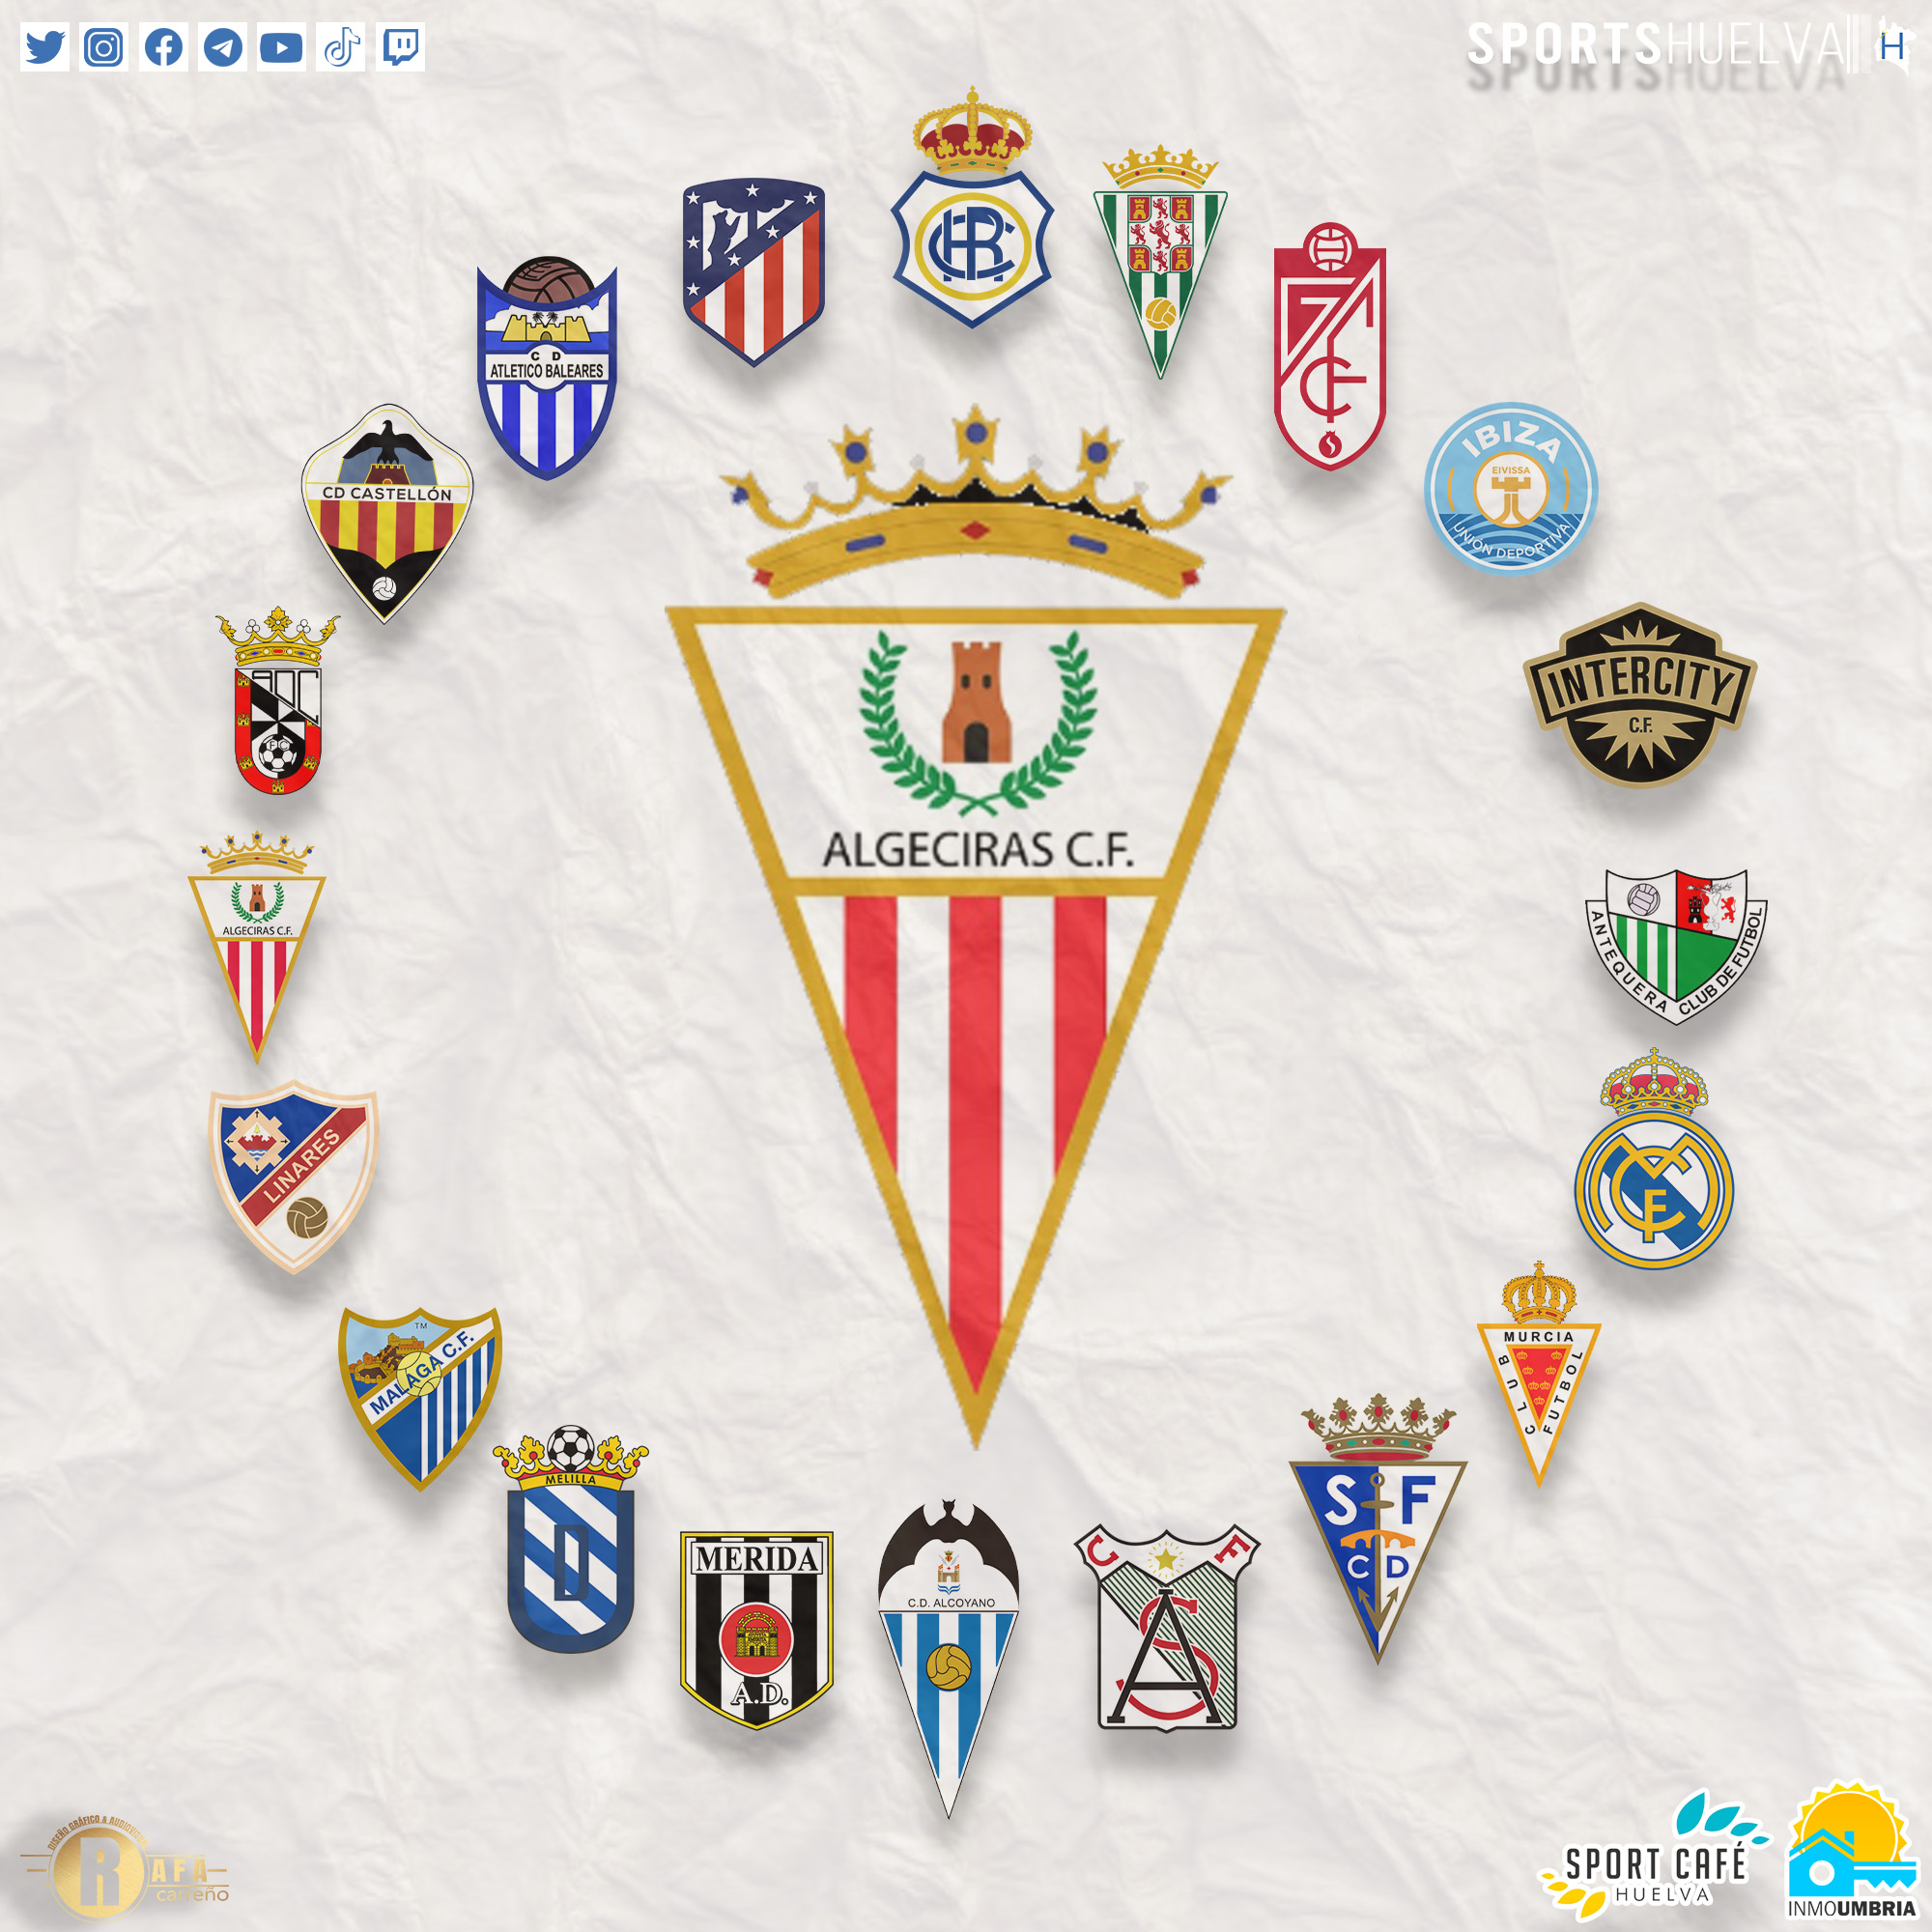 Algeciras club de fútbol